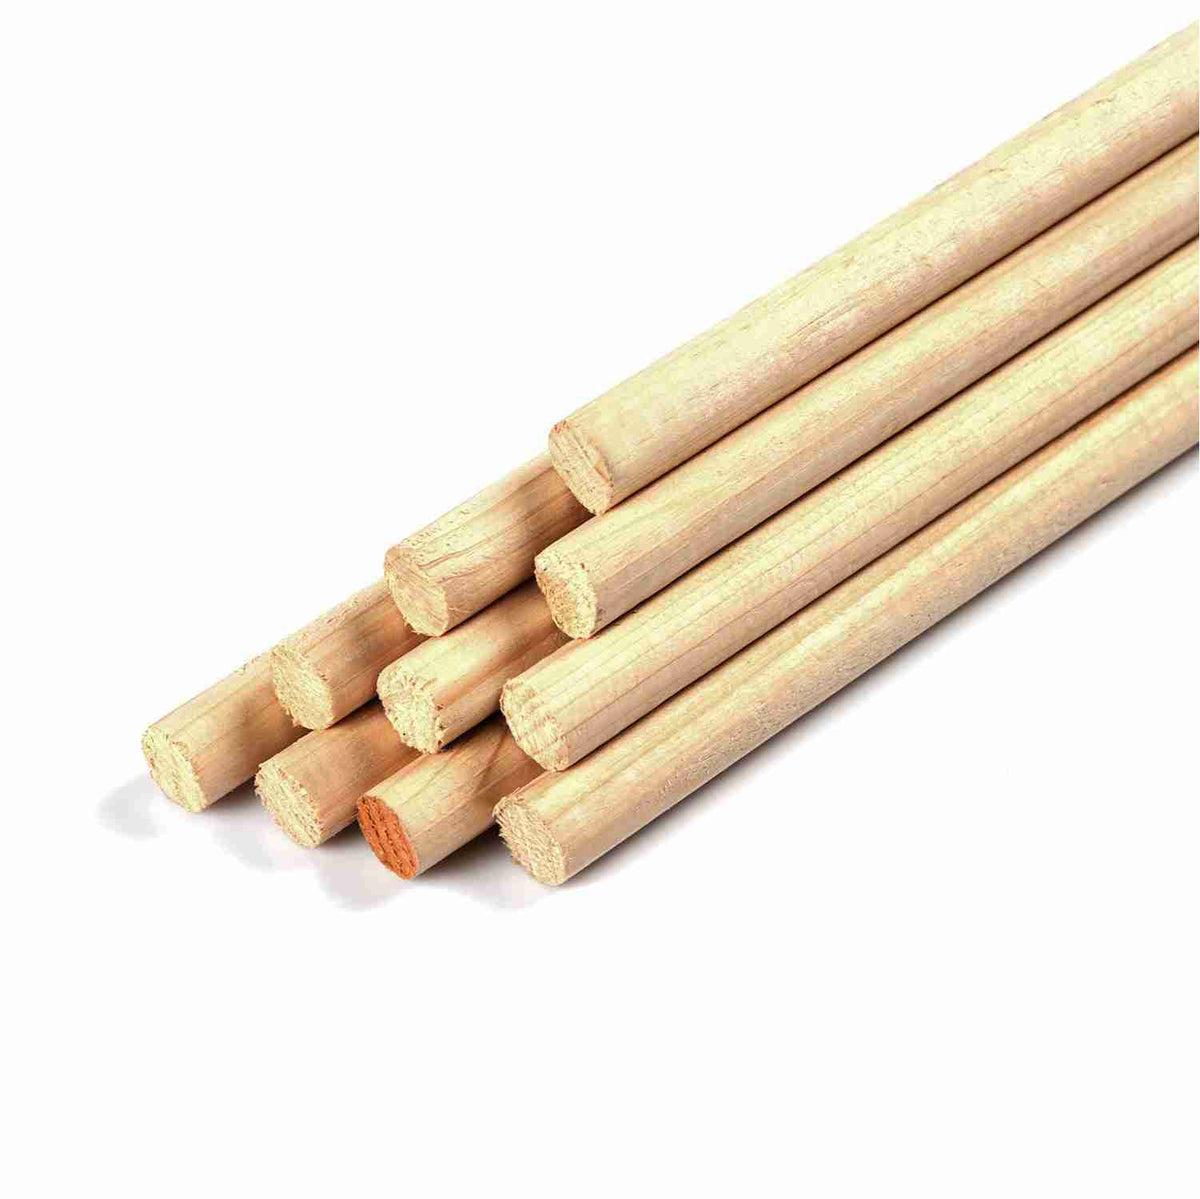 ecofynd 8 Inch wooden dowel rod, Solid hardwood sticks for Crafting,  Macrame, DIY & more. (Set of 5) Pack of 5 Price in India - Buy ecofynd 8  Inch wooden dowel rod